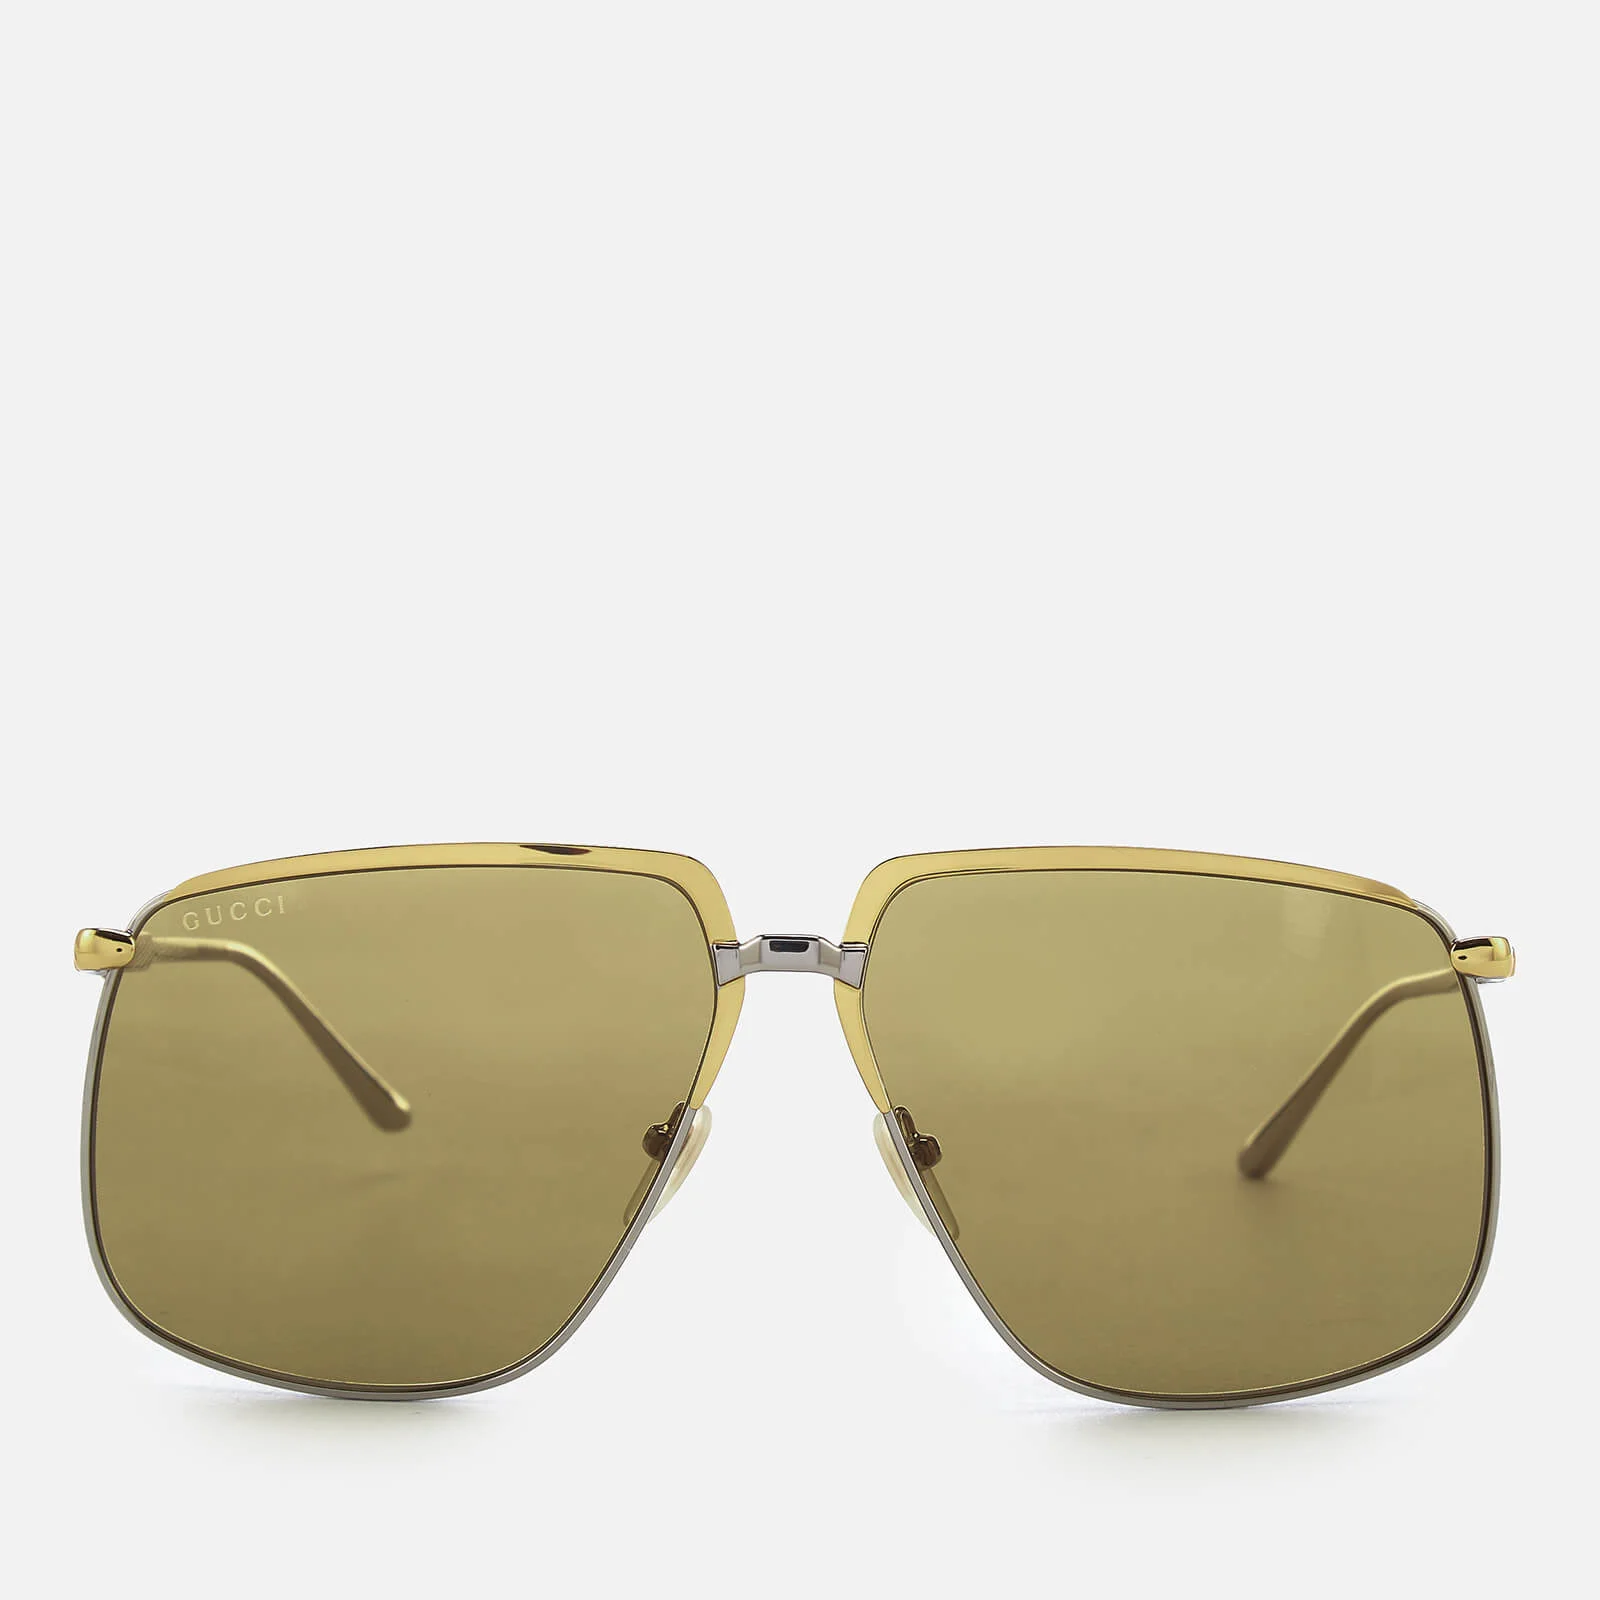 Gucci Women's Aviator Metal Frame Sunglasses - Gold Image 1